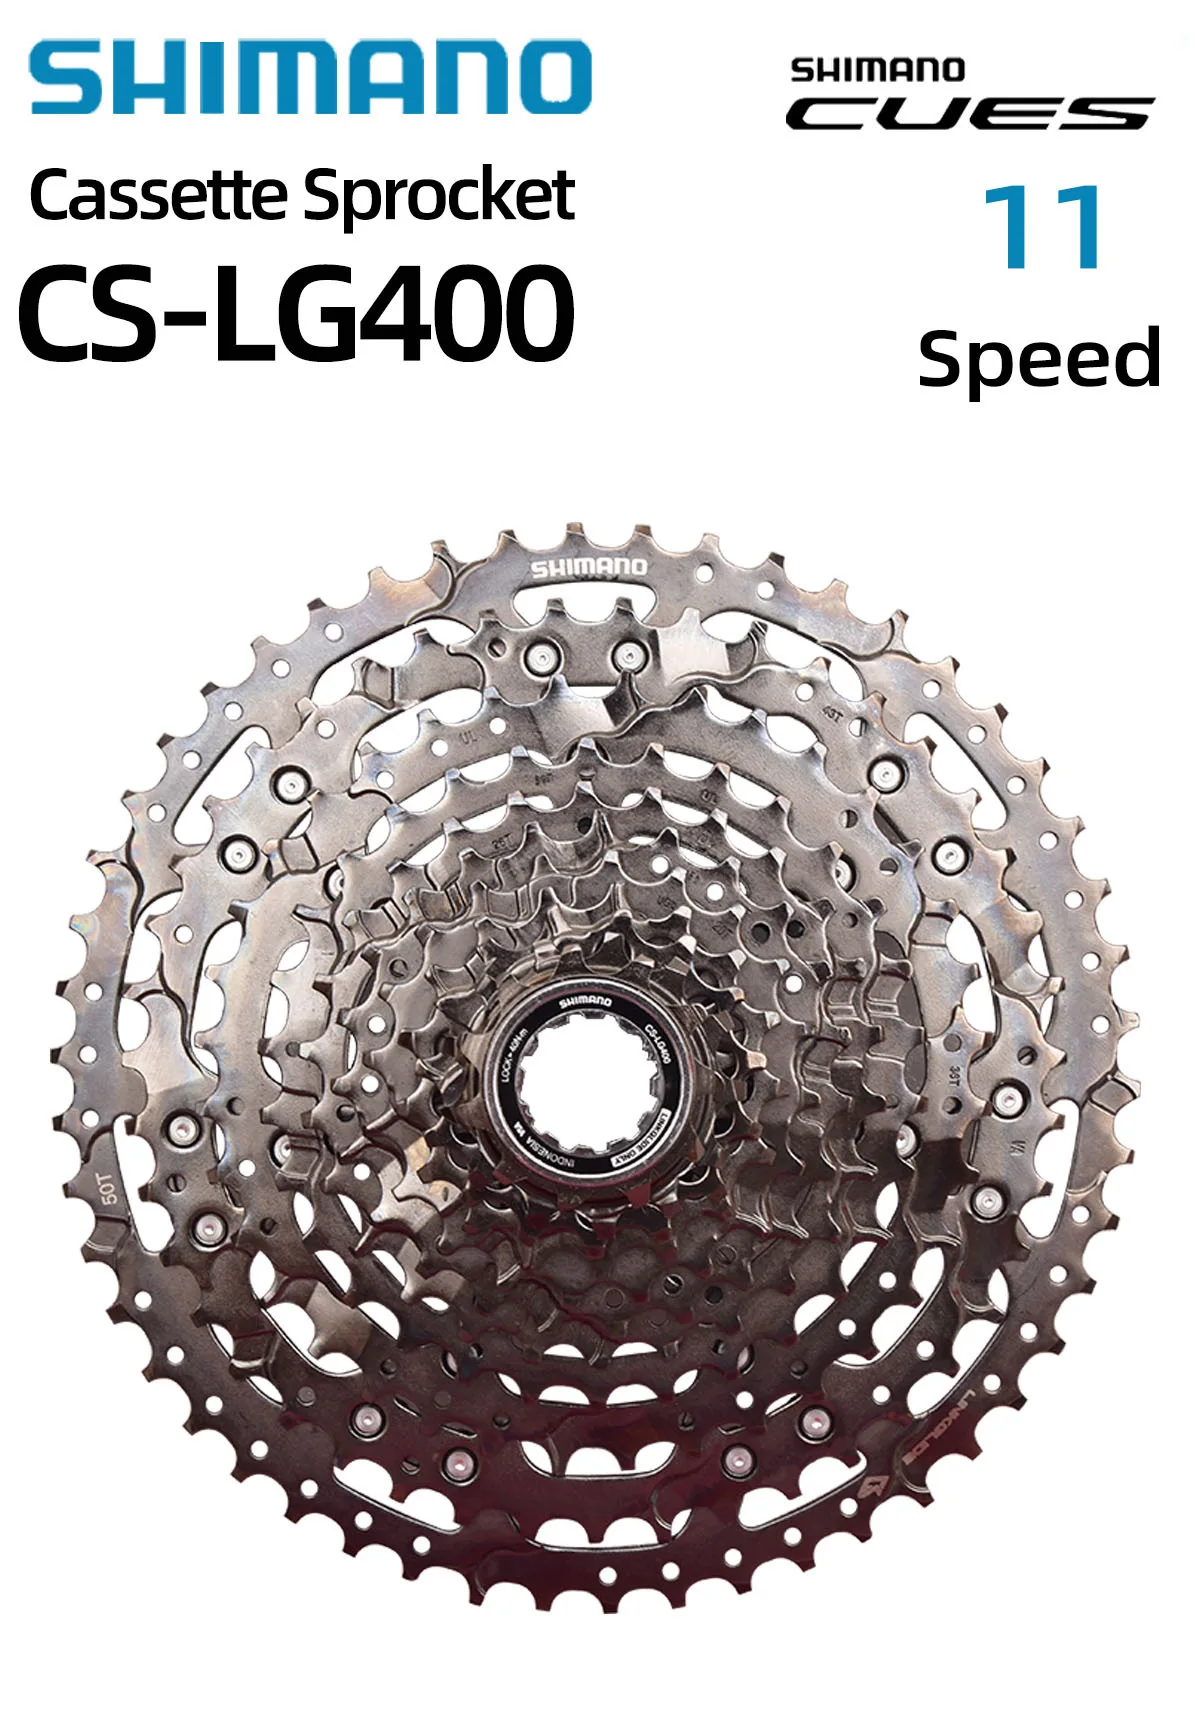 SHIMANO רמזים U6000 Rear Derailleur החליפה 11Speed אופני הרים SL-U6000-11R RD-U6000 CS-LG400 CN-LG500 חלקים מקוריים. - 3